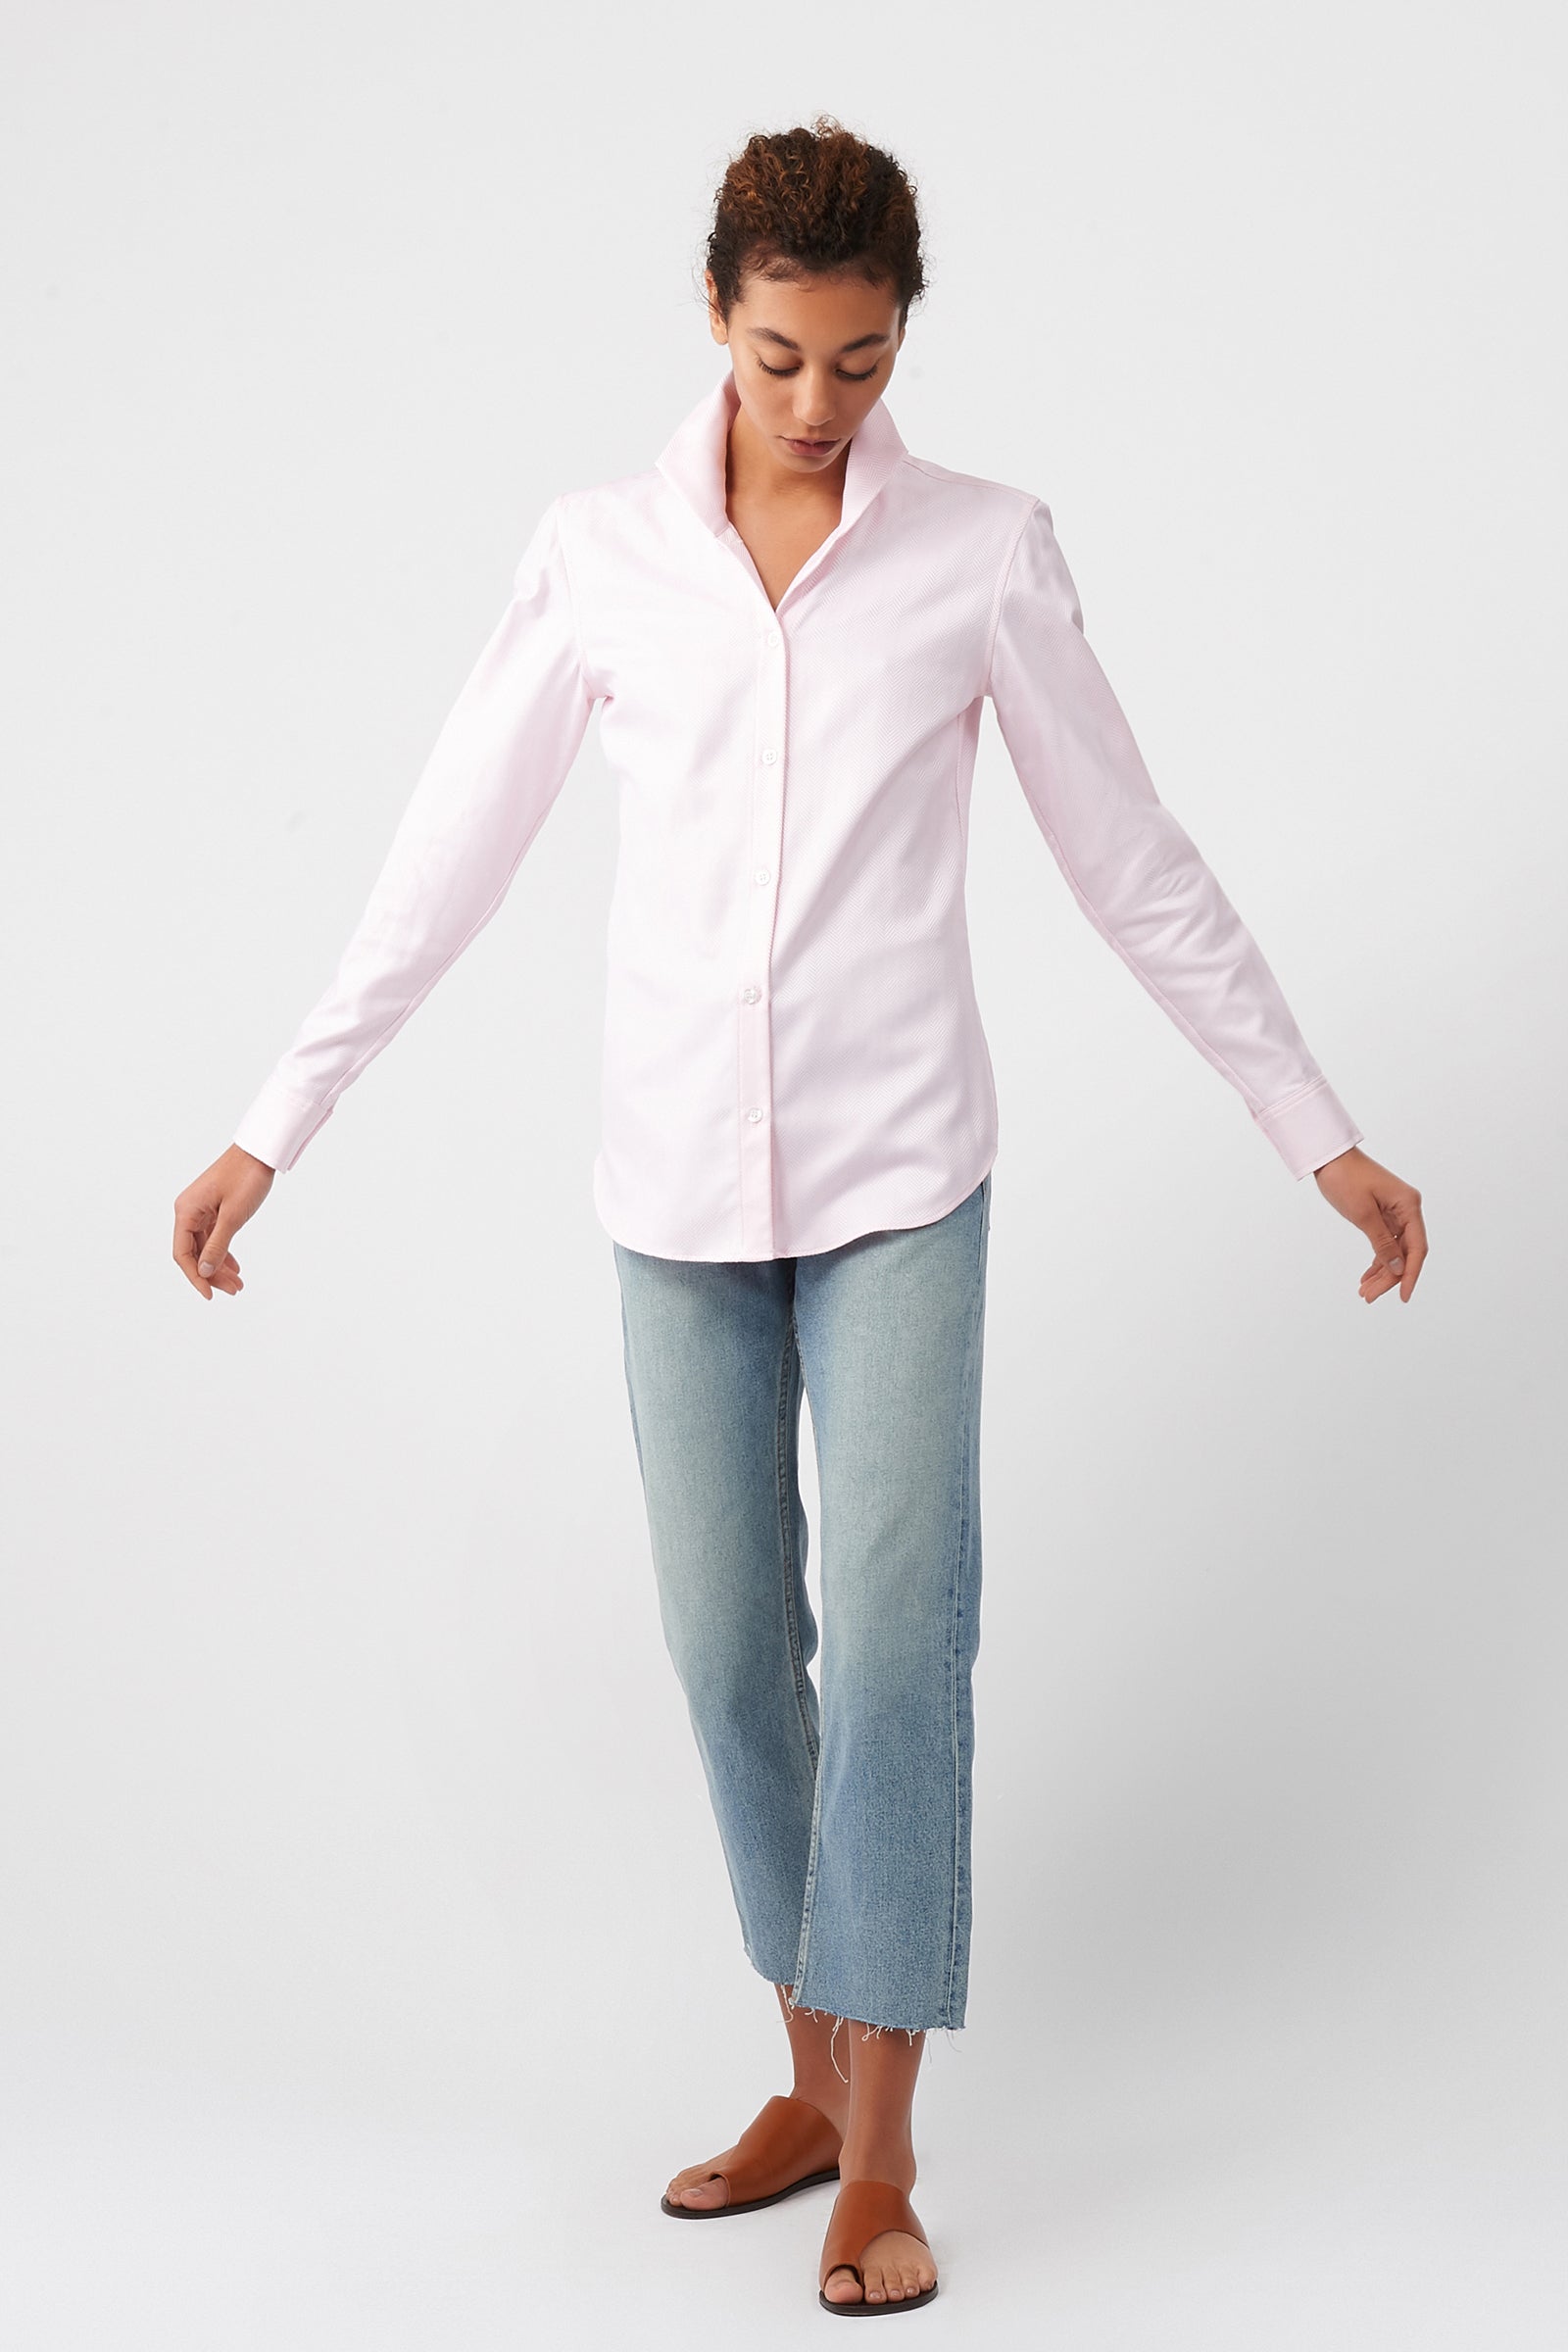 Kal Rieman Ginna Box Pleat Shirt in Pink Herringbone on Model Full Front View